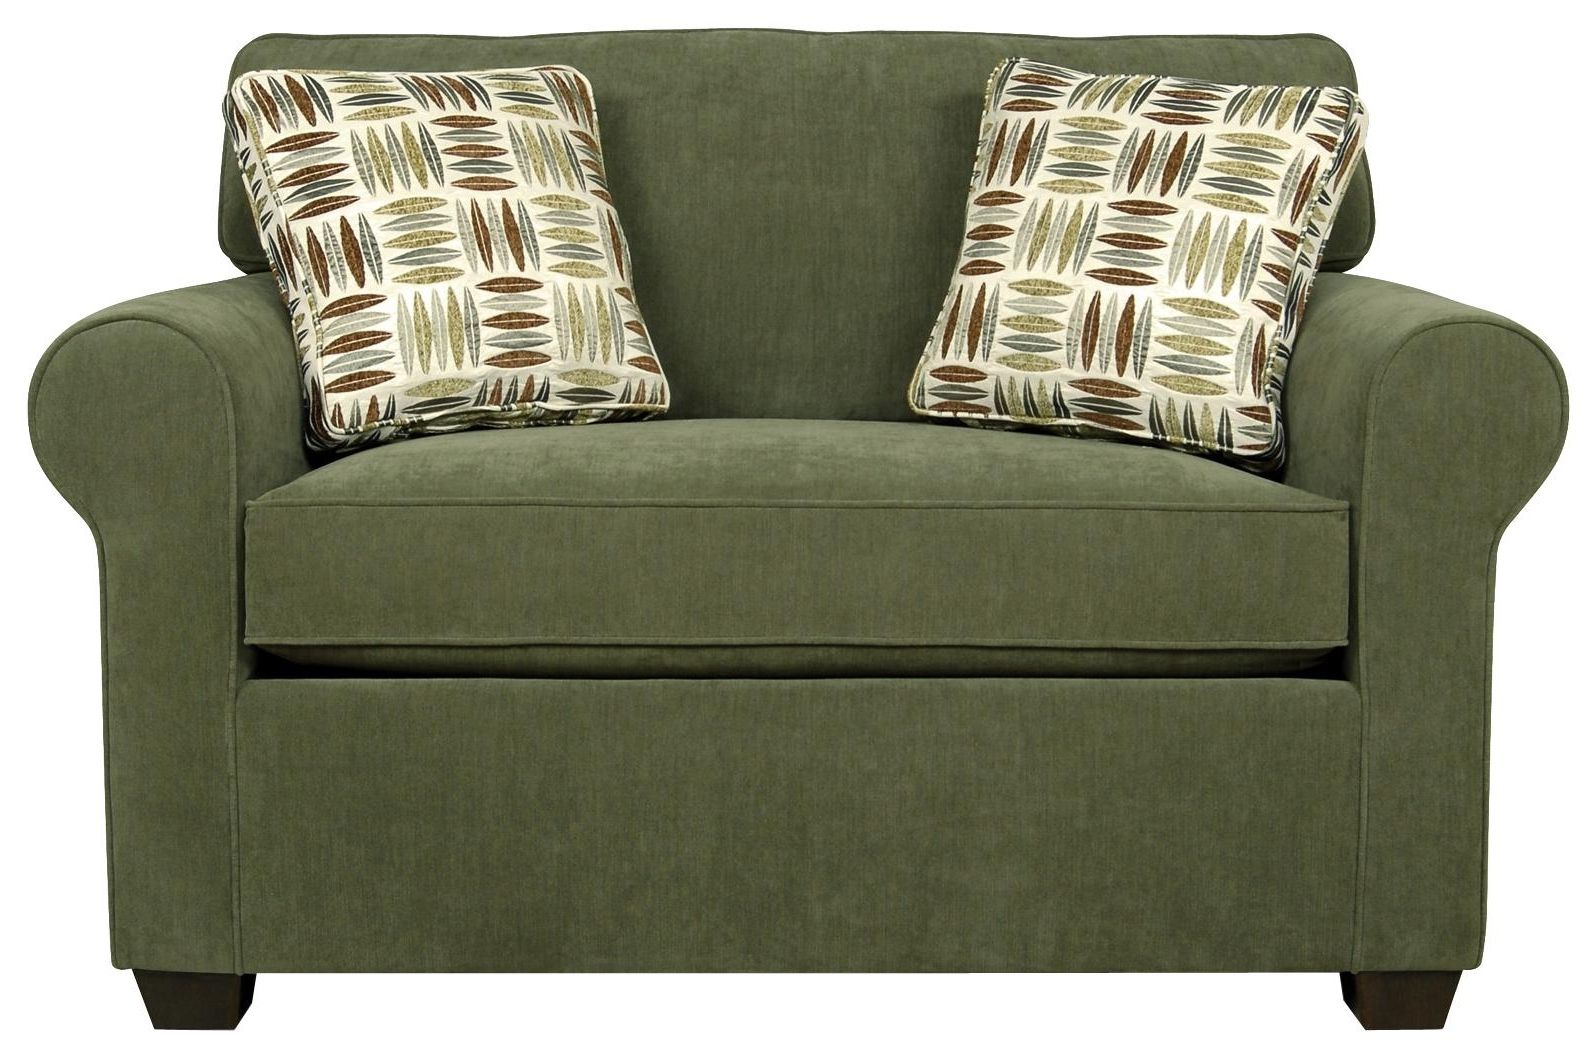 England Seabury Visco Mattress Twin Size Sleeper Sofa For Living Inside Latest Twin Sleeper Sofa Chairs (View 2 of 15)